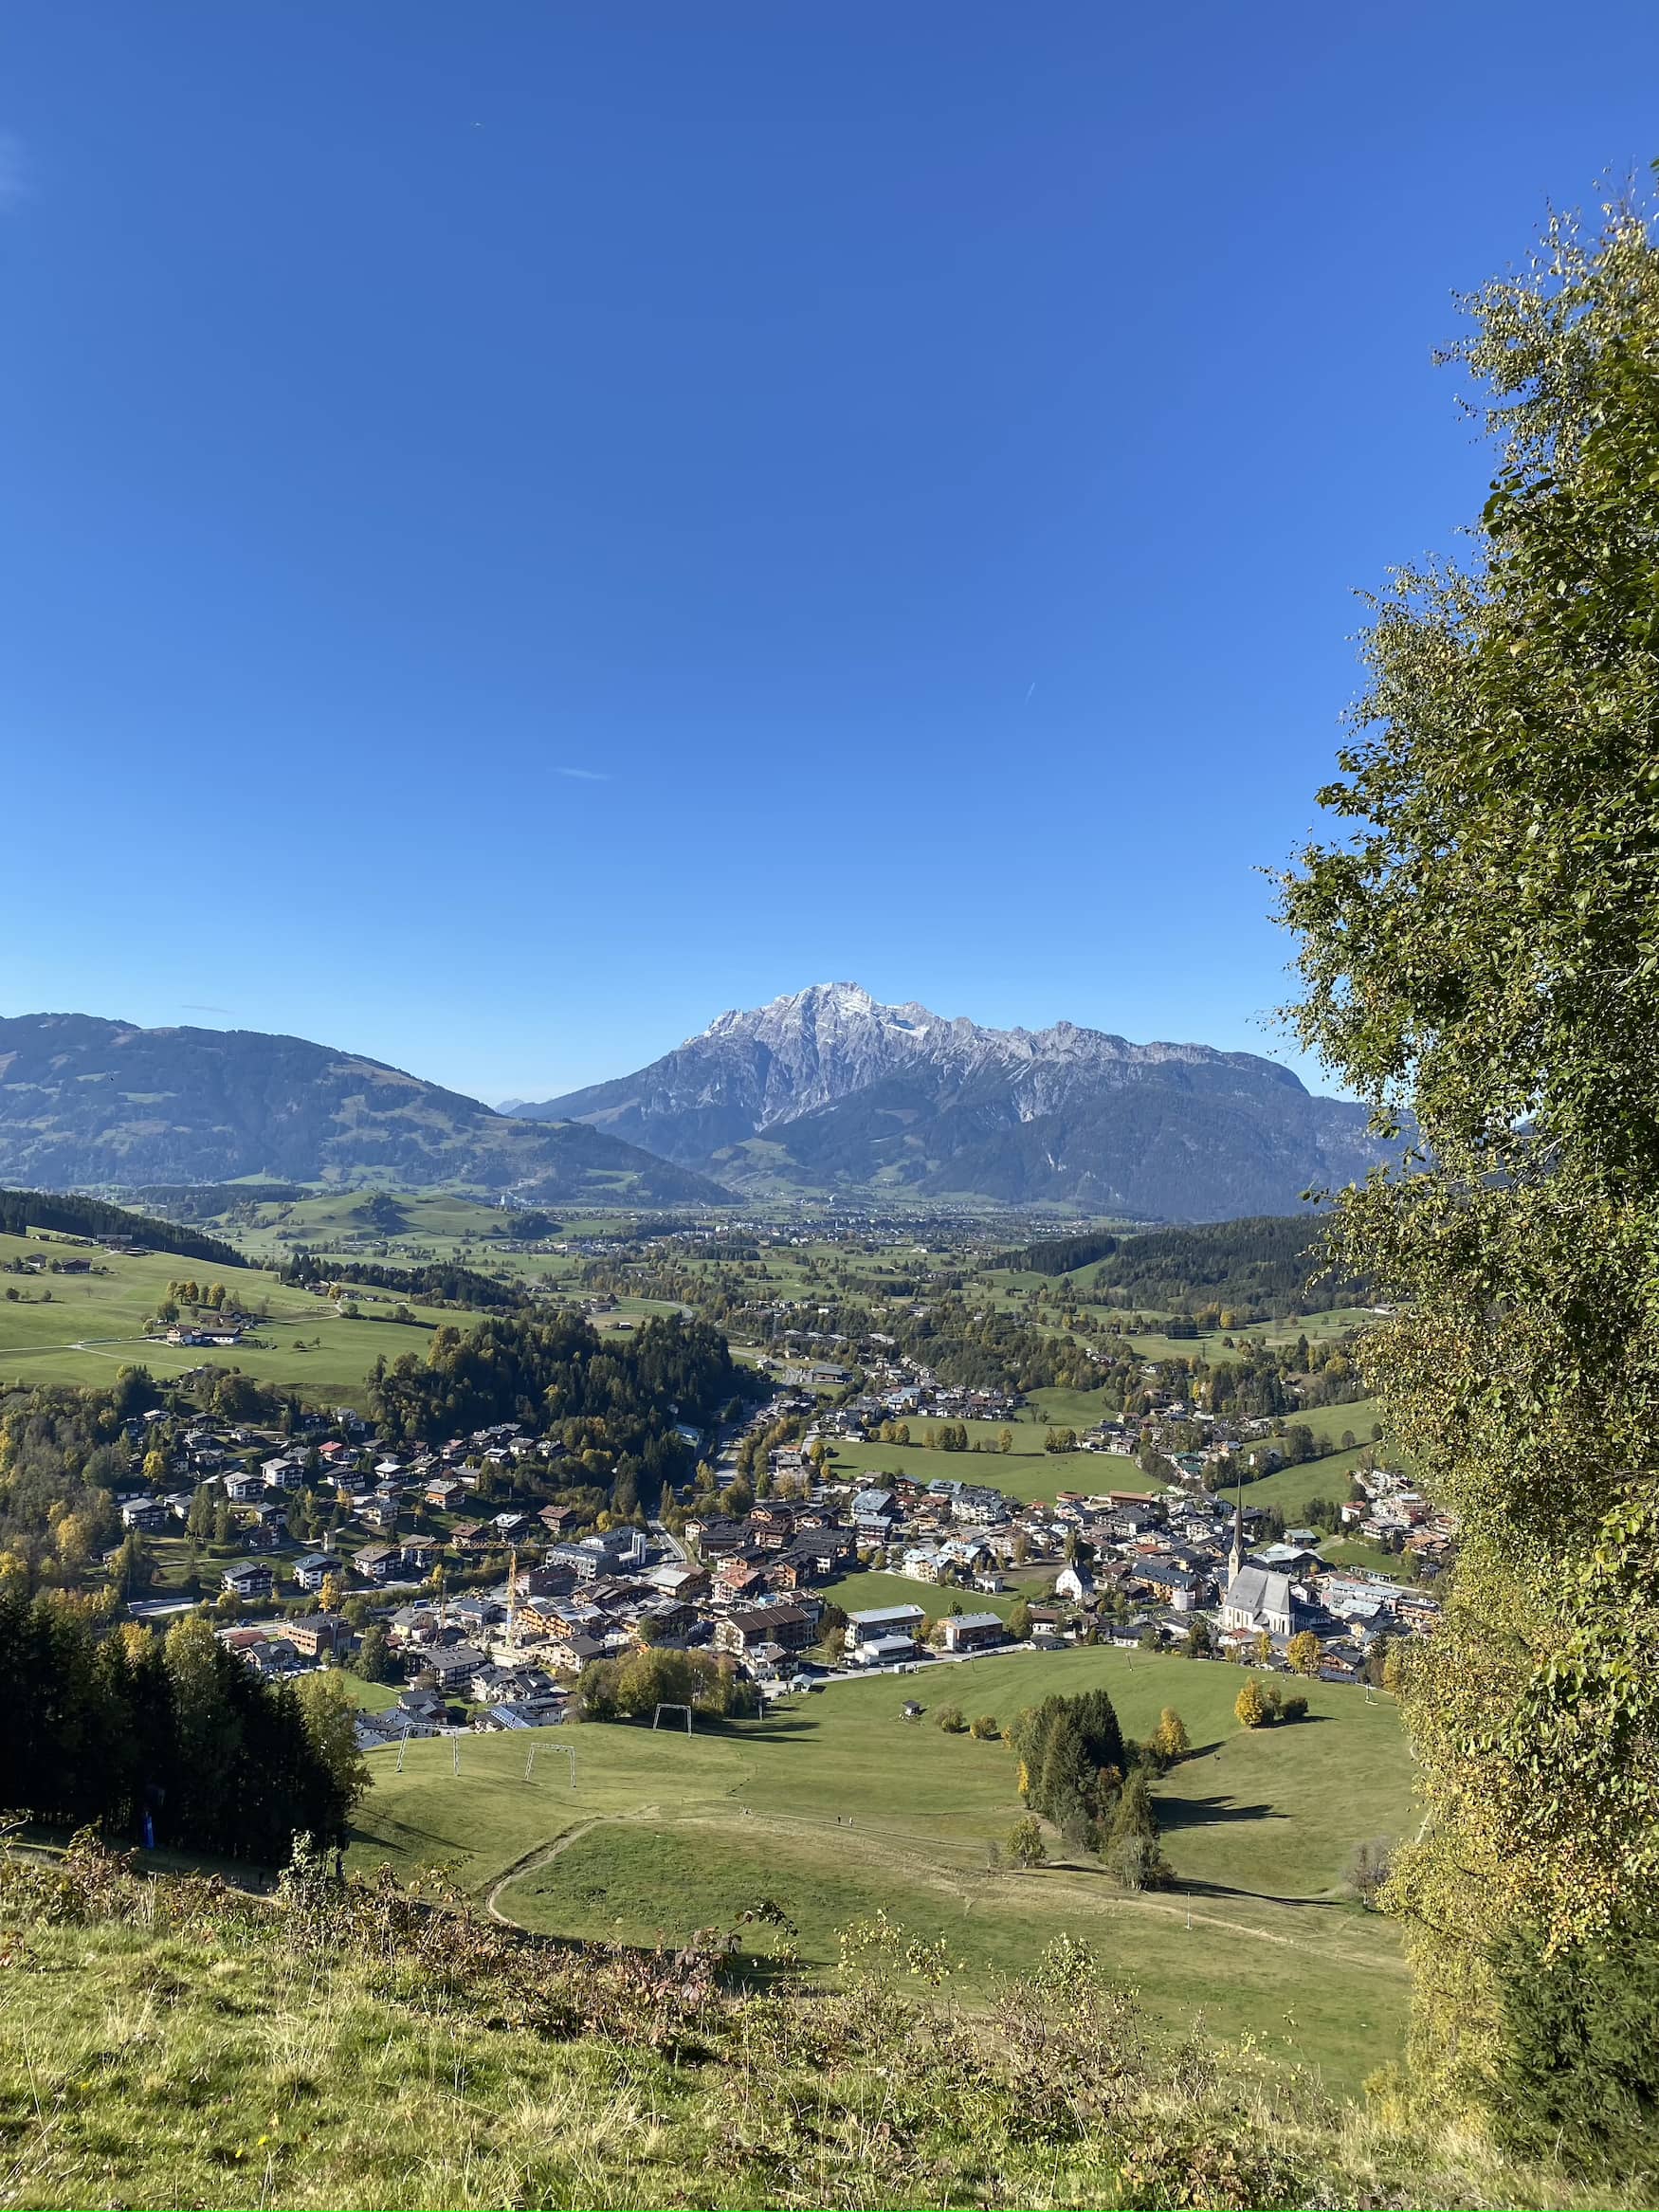 Jan Malt Andersen fell in love with the mountains - in Austria